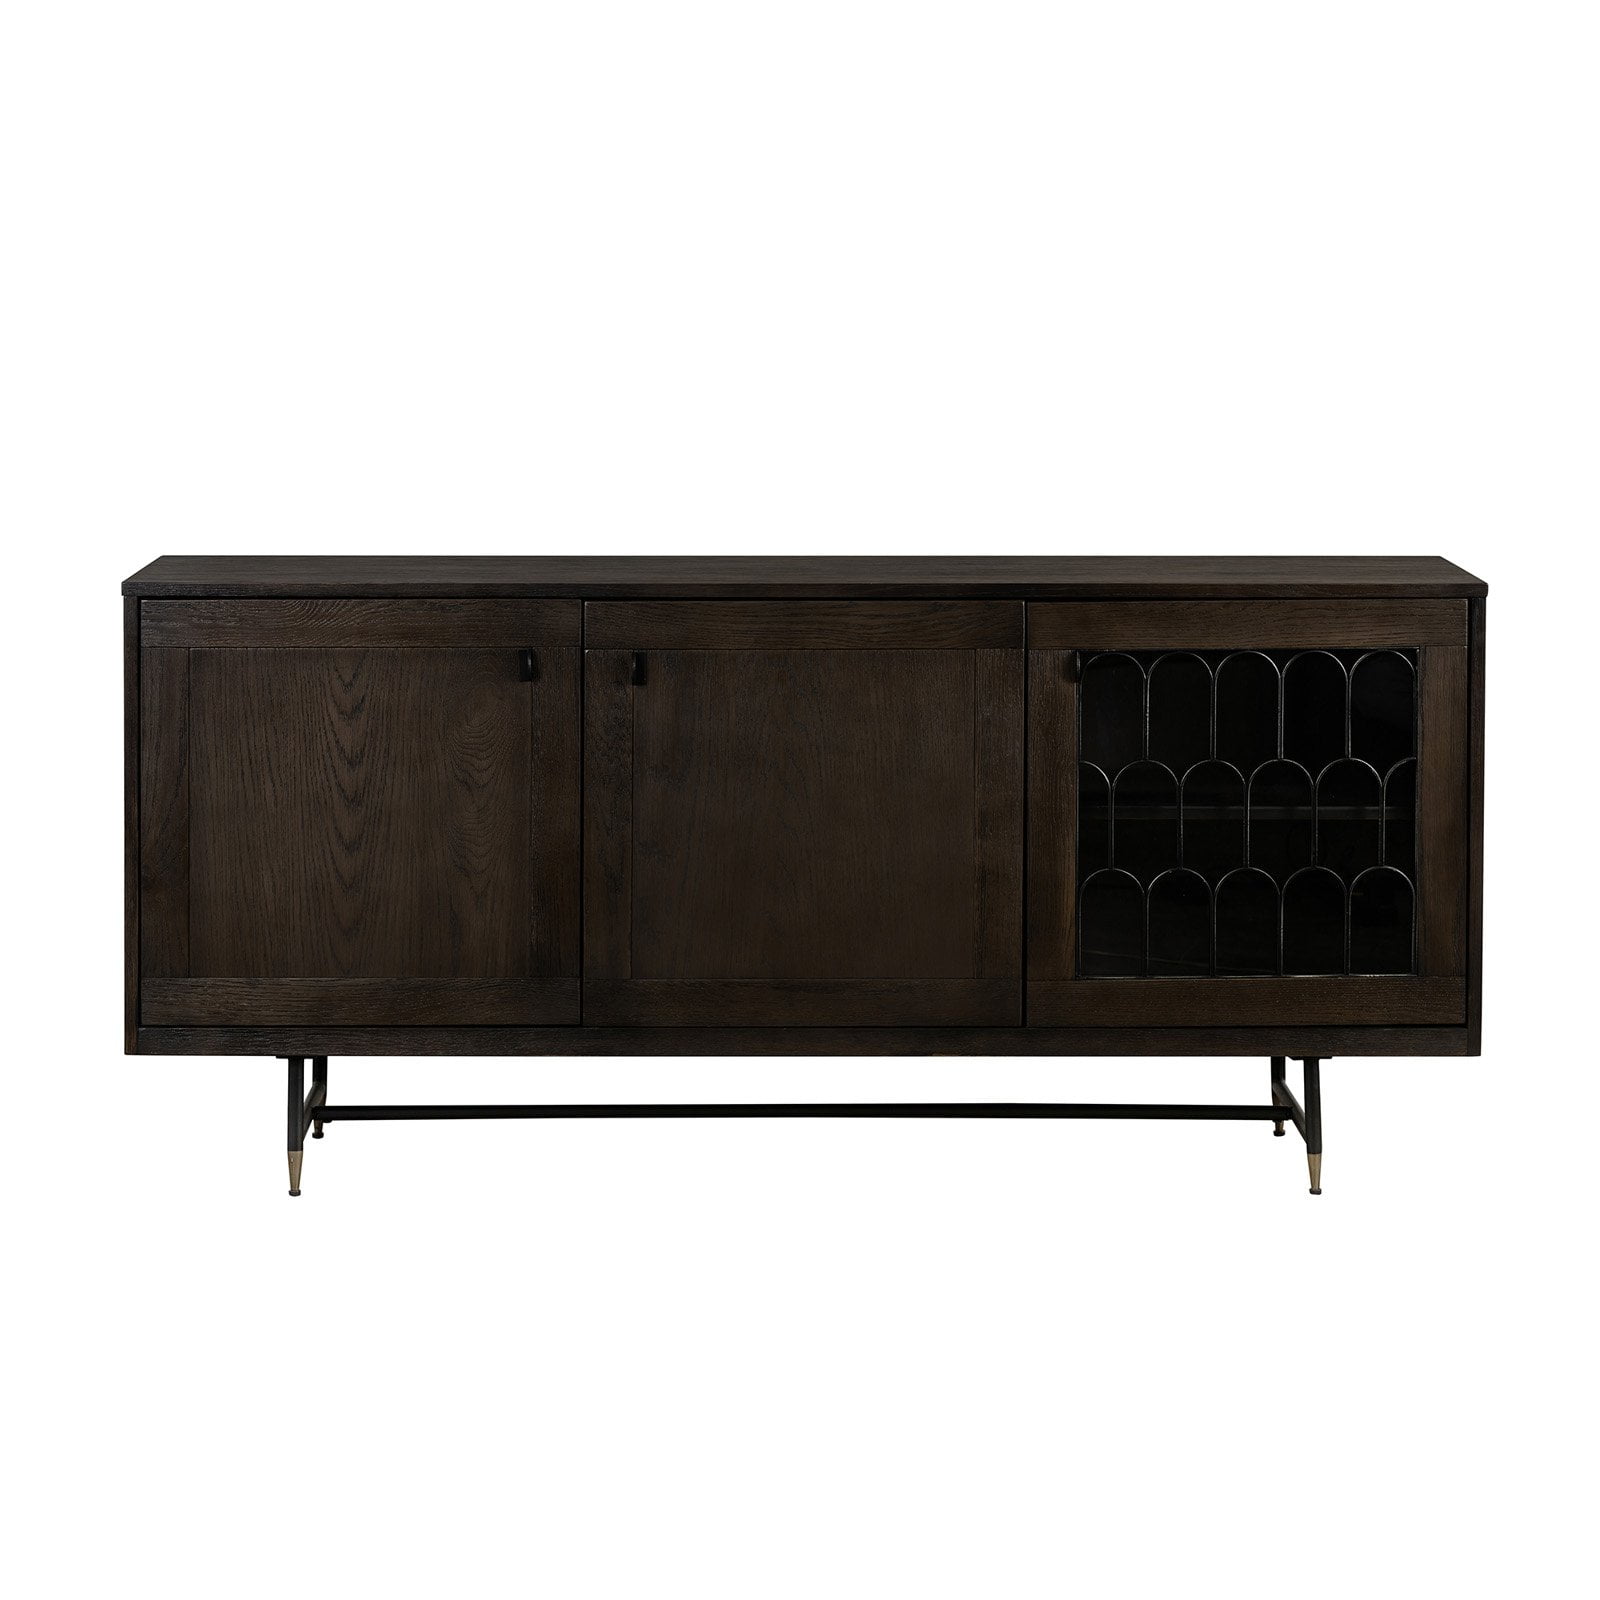 Picture of Armen Living LCGTBUOA Gatsby Oak & Metal Buffet Cabinet - 30 x 66 x 18 in.